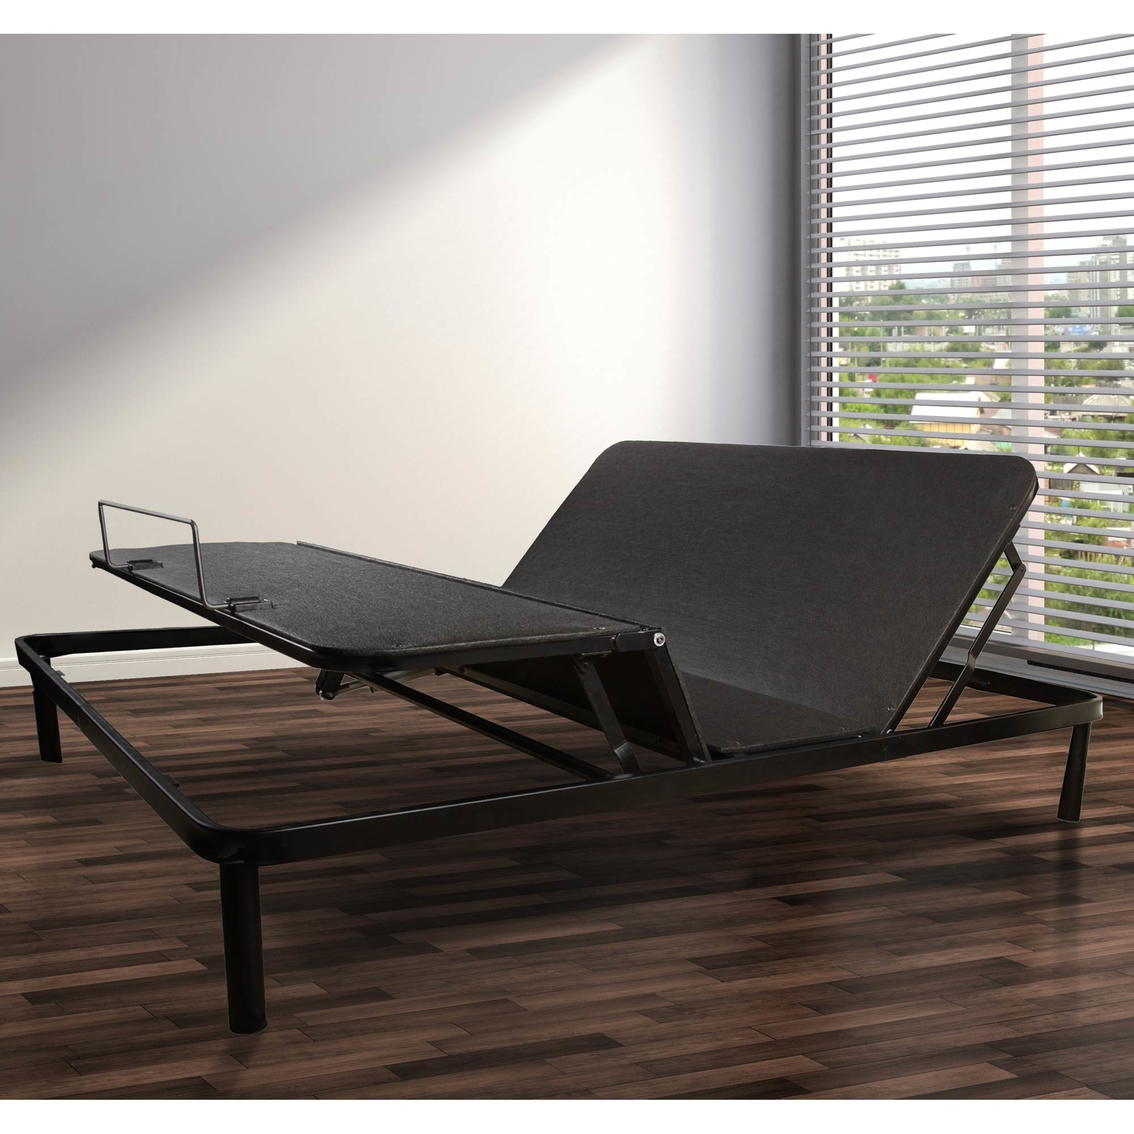 Primo International Pinnacle Adjustable Bed - Image 4 of 4